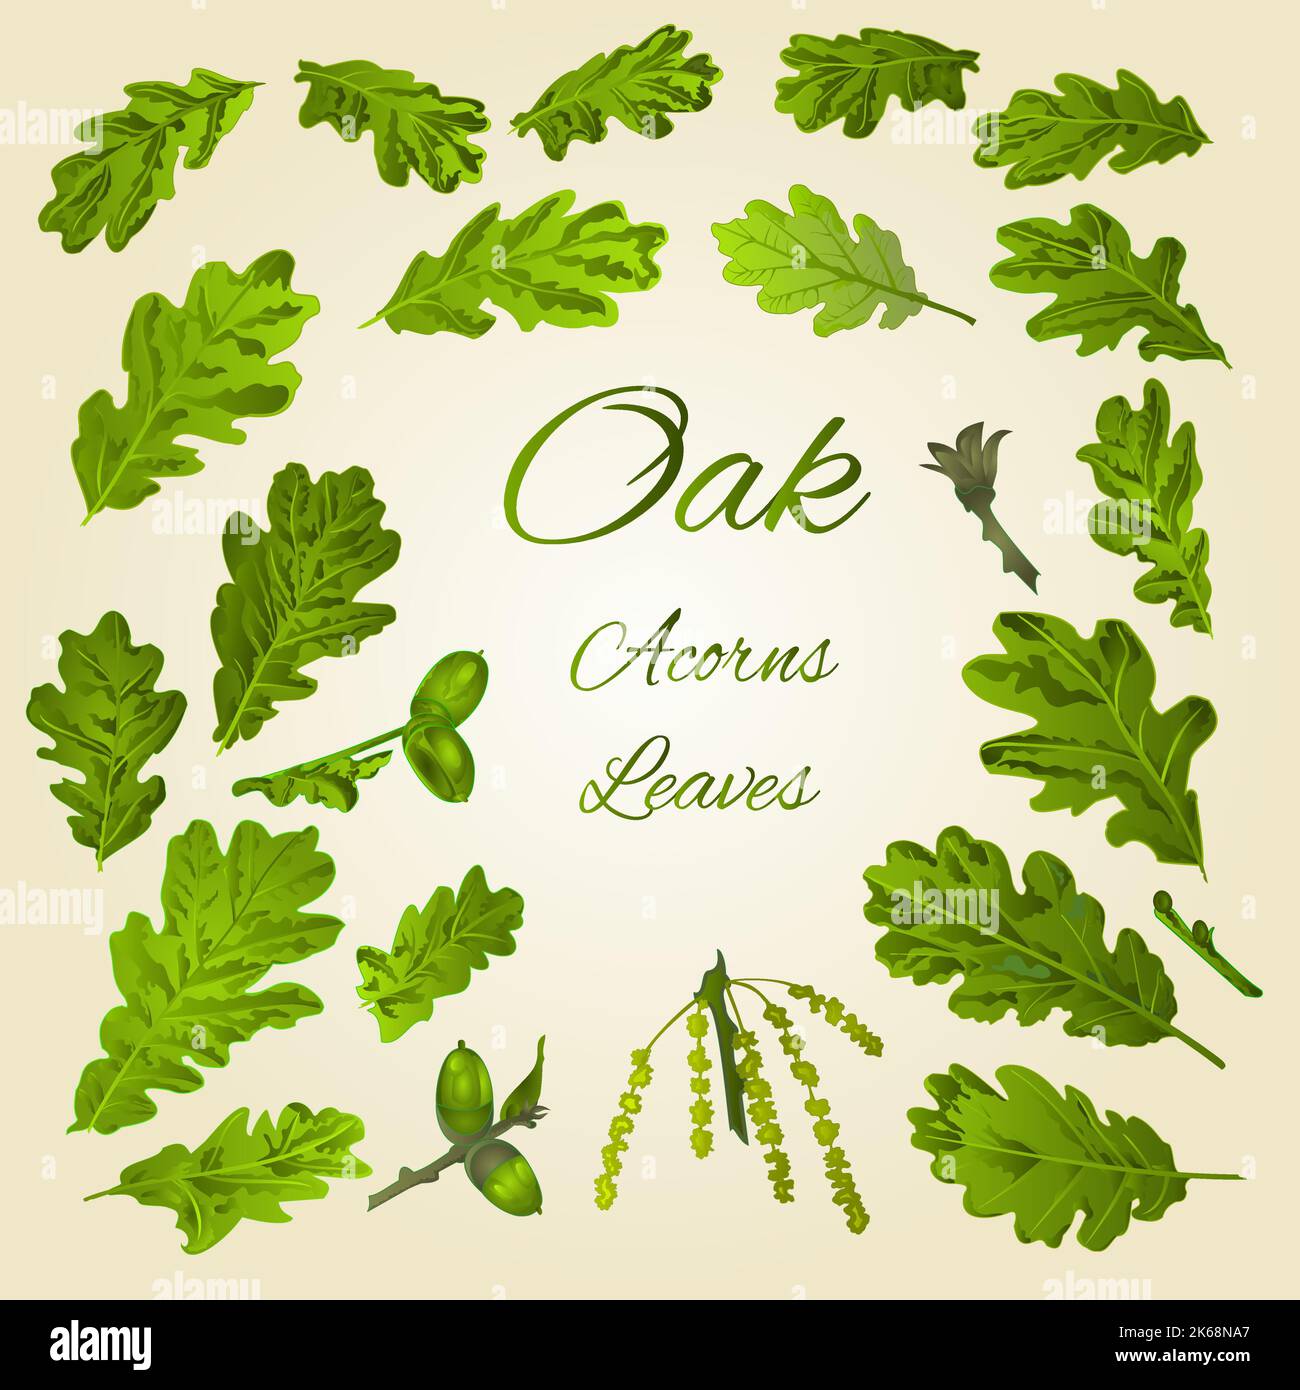 Oak leaves and acorns vector Stock Vector